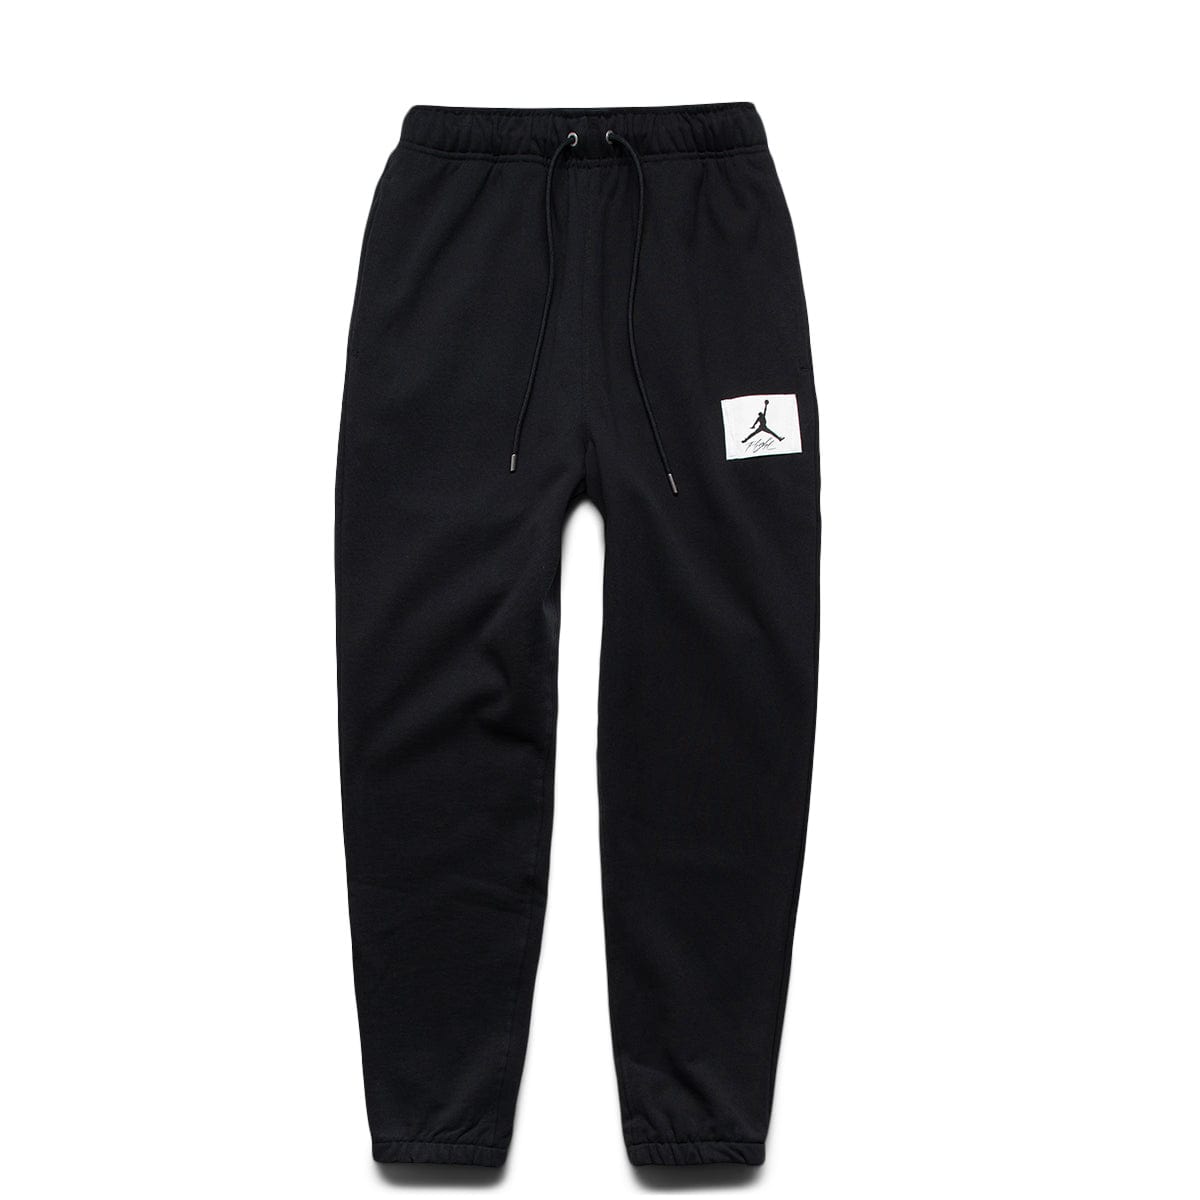 Jordan Essentials Fleece Pants Black / Black - White